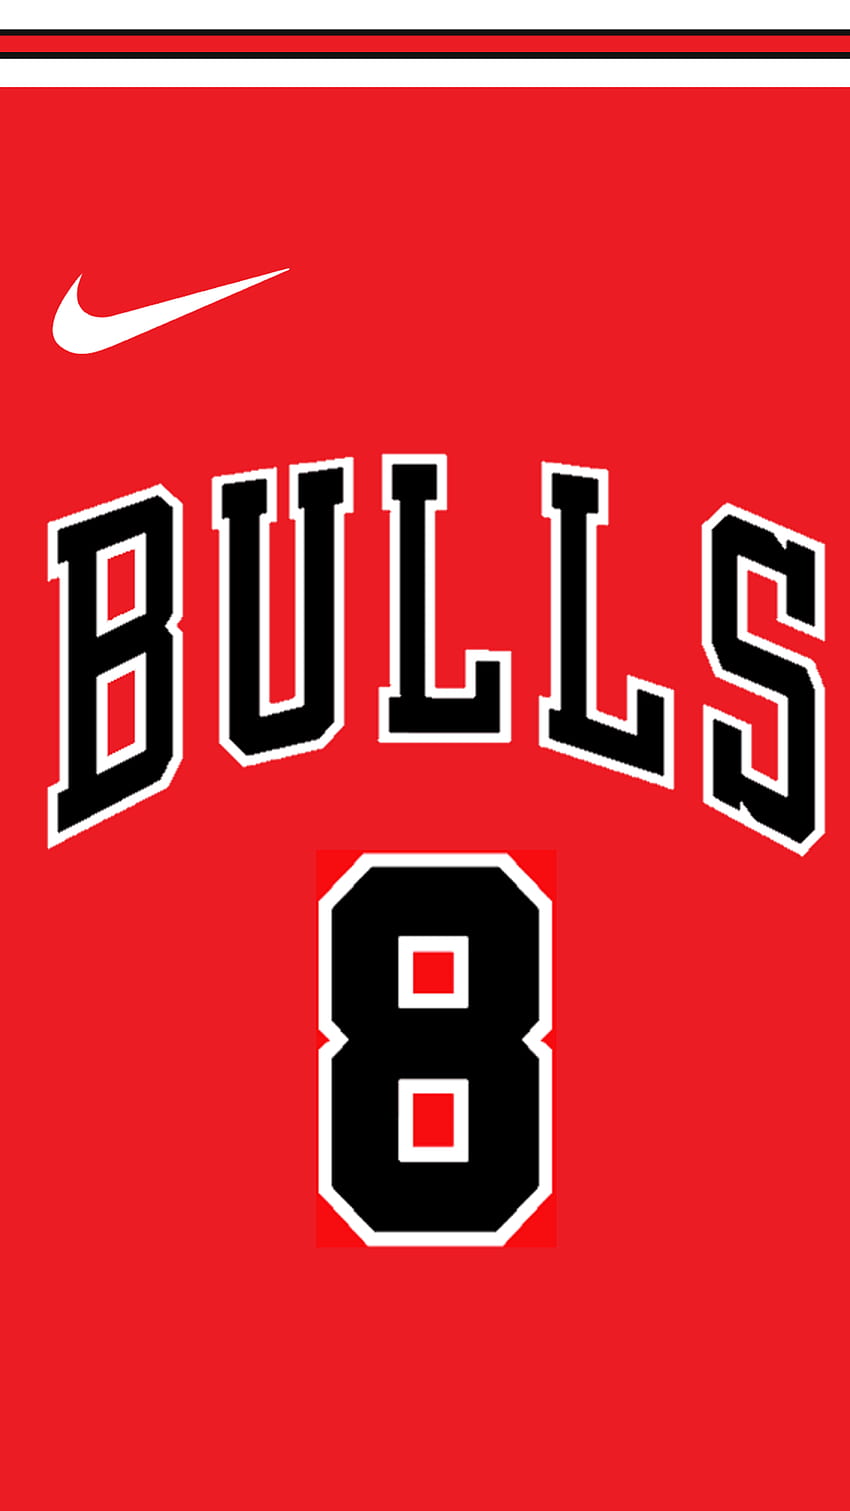 Luigi DePaul sur NBA Nike Jersey en 2021. Chicago bulls, Chicago bulls logo, Chicago bulls logo, Michael Jordan Jersey Fond d'écran de téléphone HD